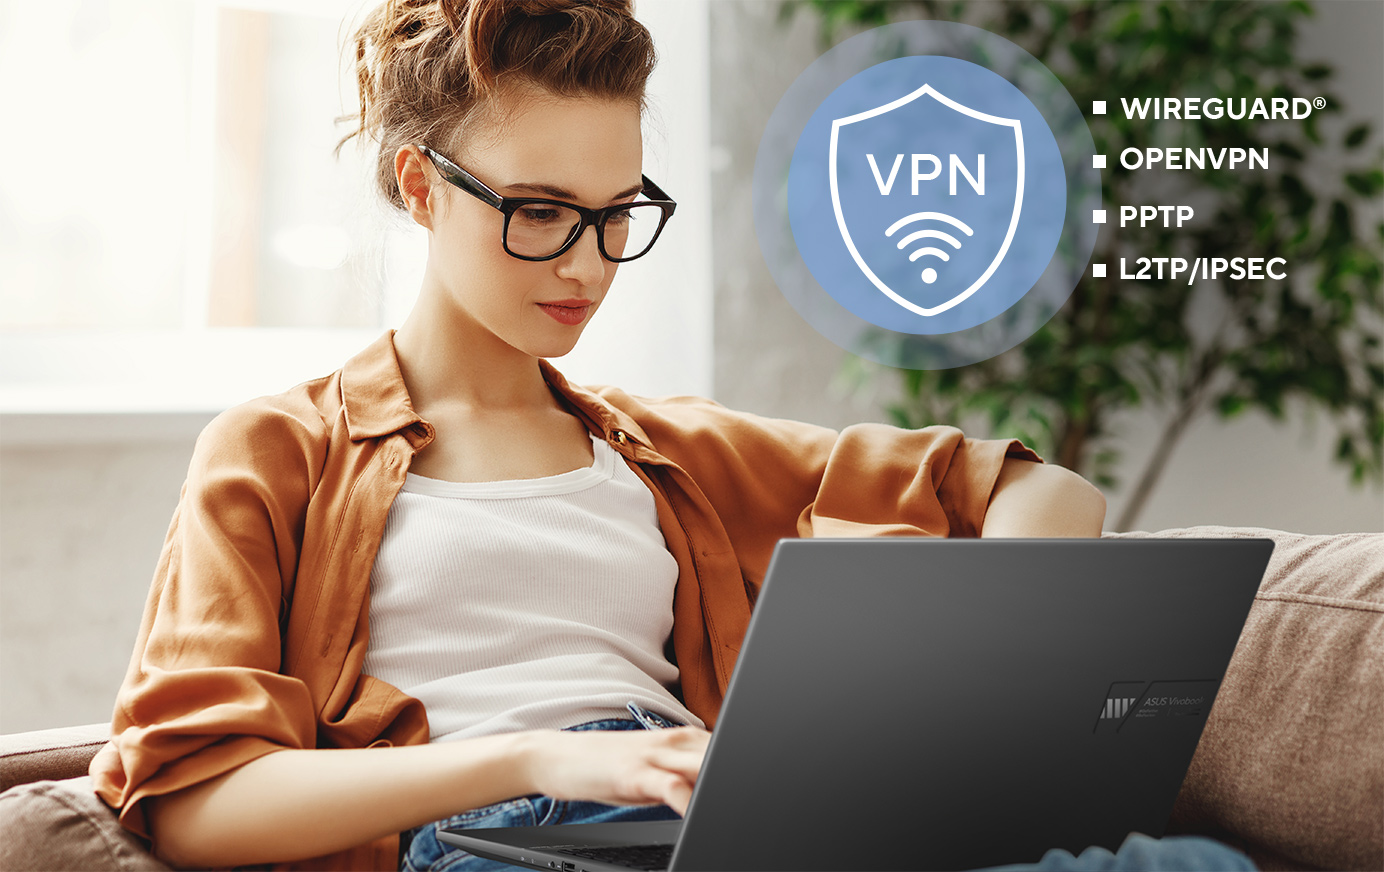 ASUS 路由器支援各種 VPN 安全協定，包括 WireGuard®、OpenVPN、PPTP 及 L2TP/IPSec。